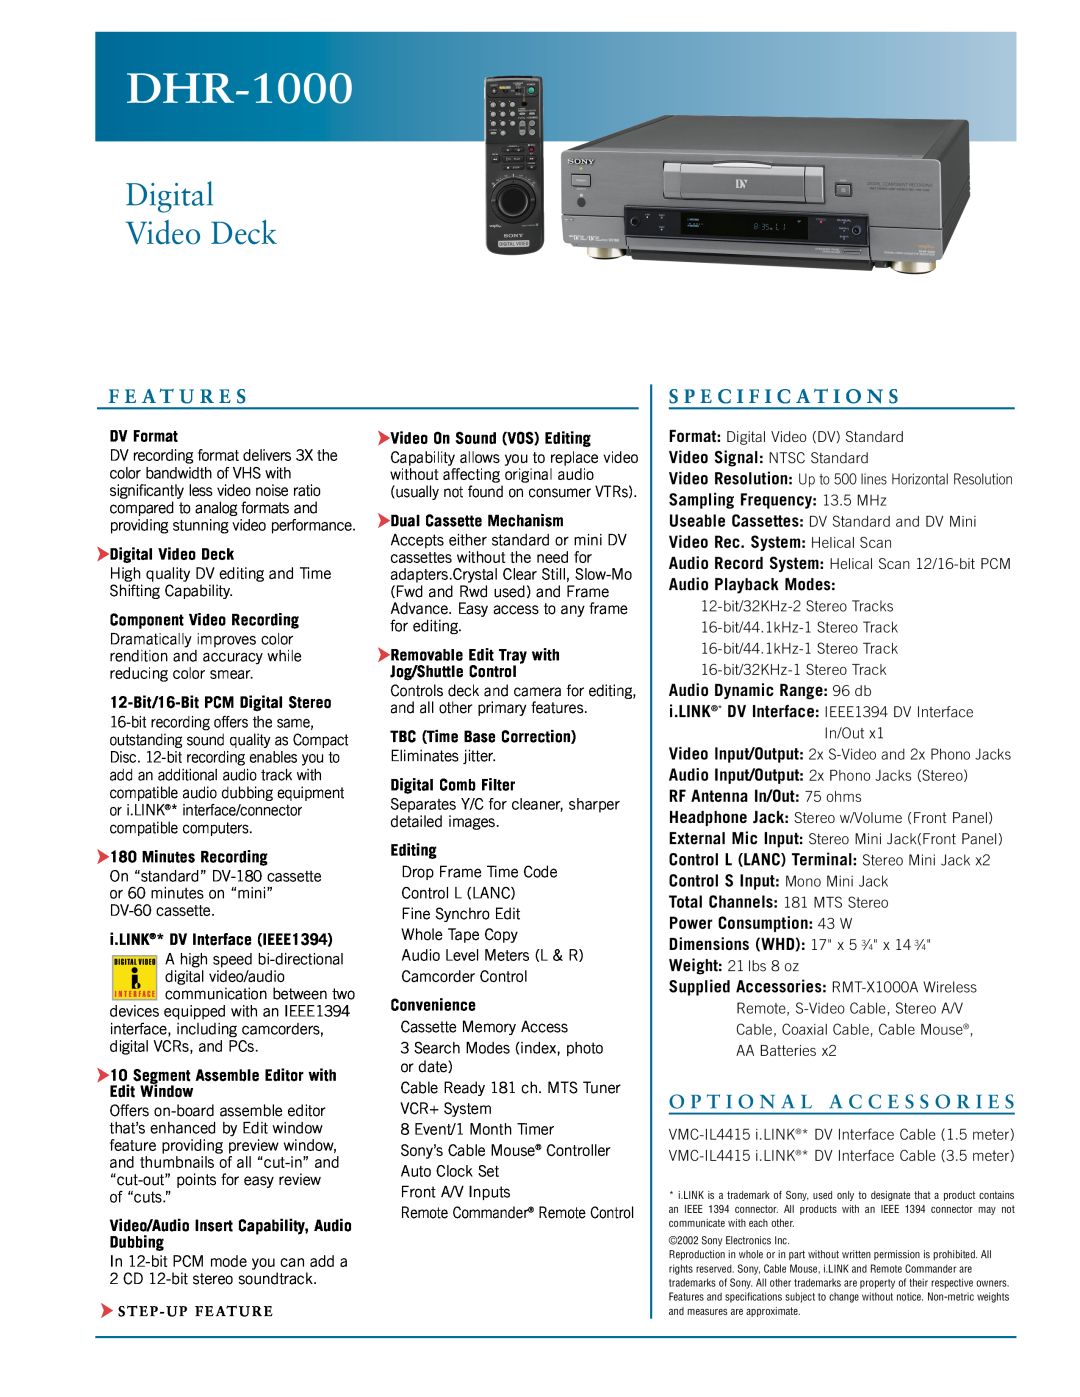 Sony DHR-1000 specifications Digital Video Deck, F E A T U R E S, S P E C I F I C A T I O N S, Video Signal NTSC Standard 